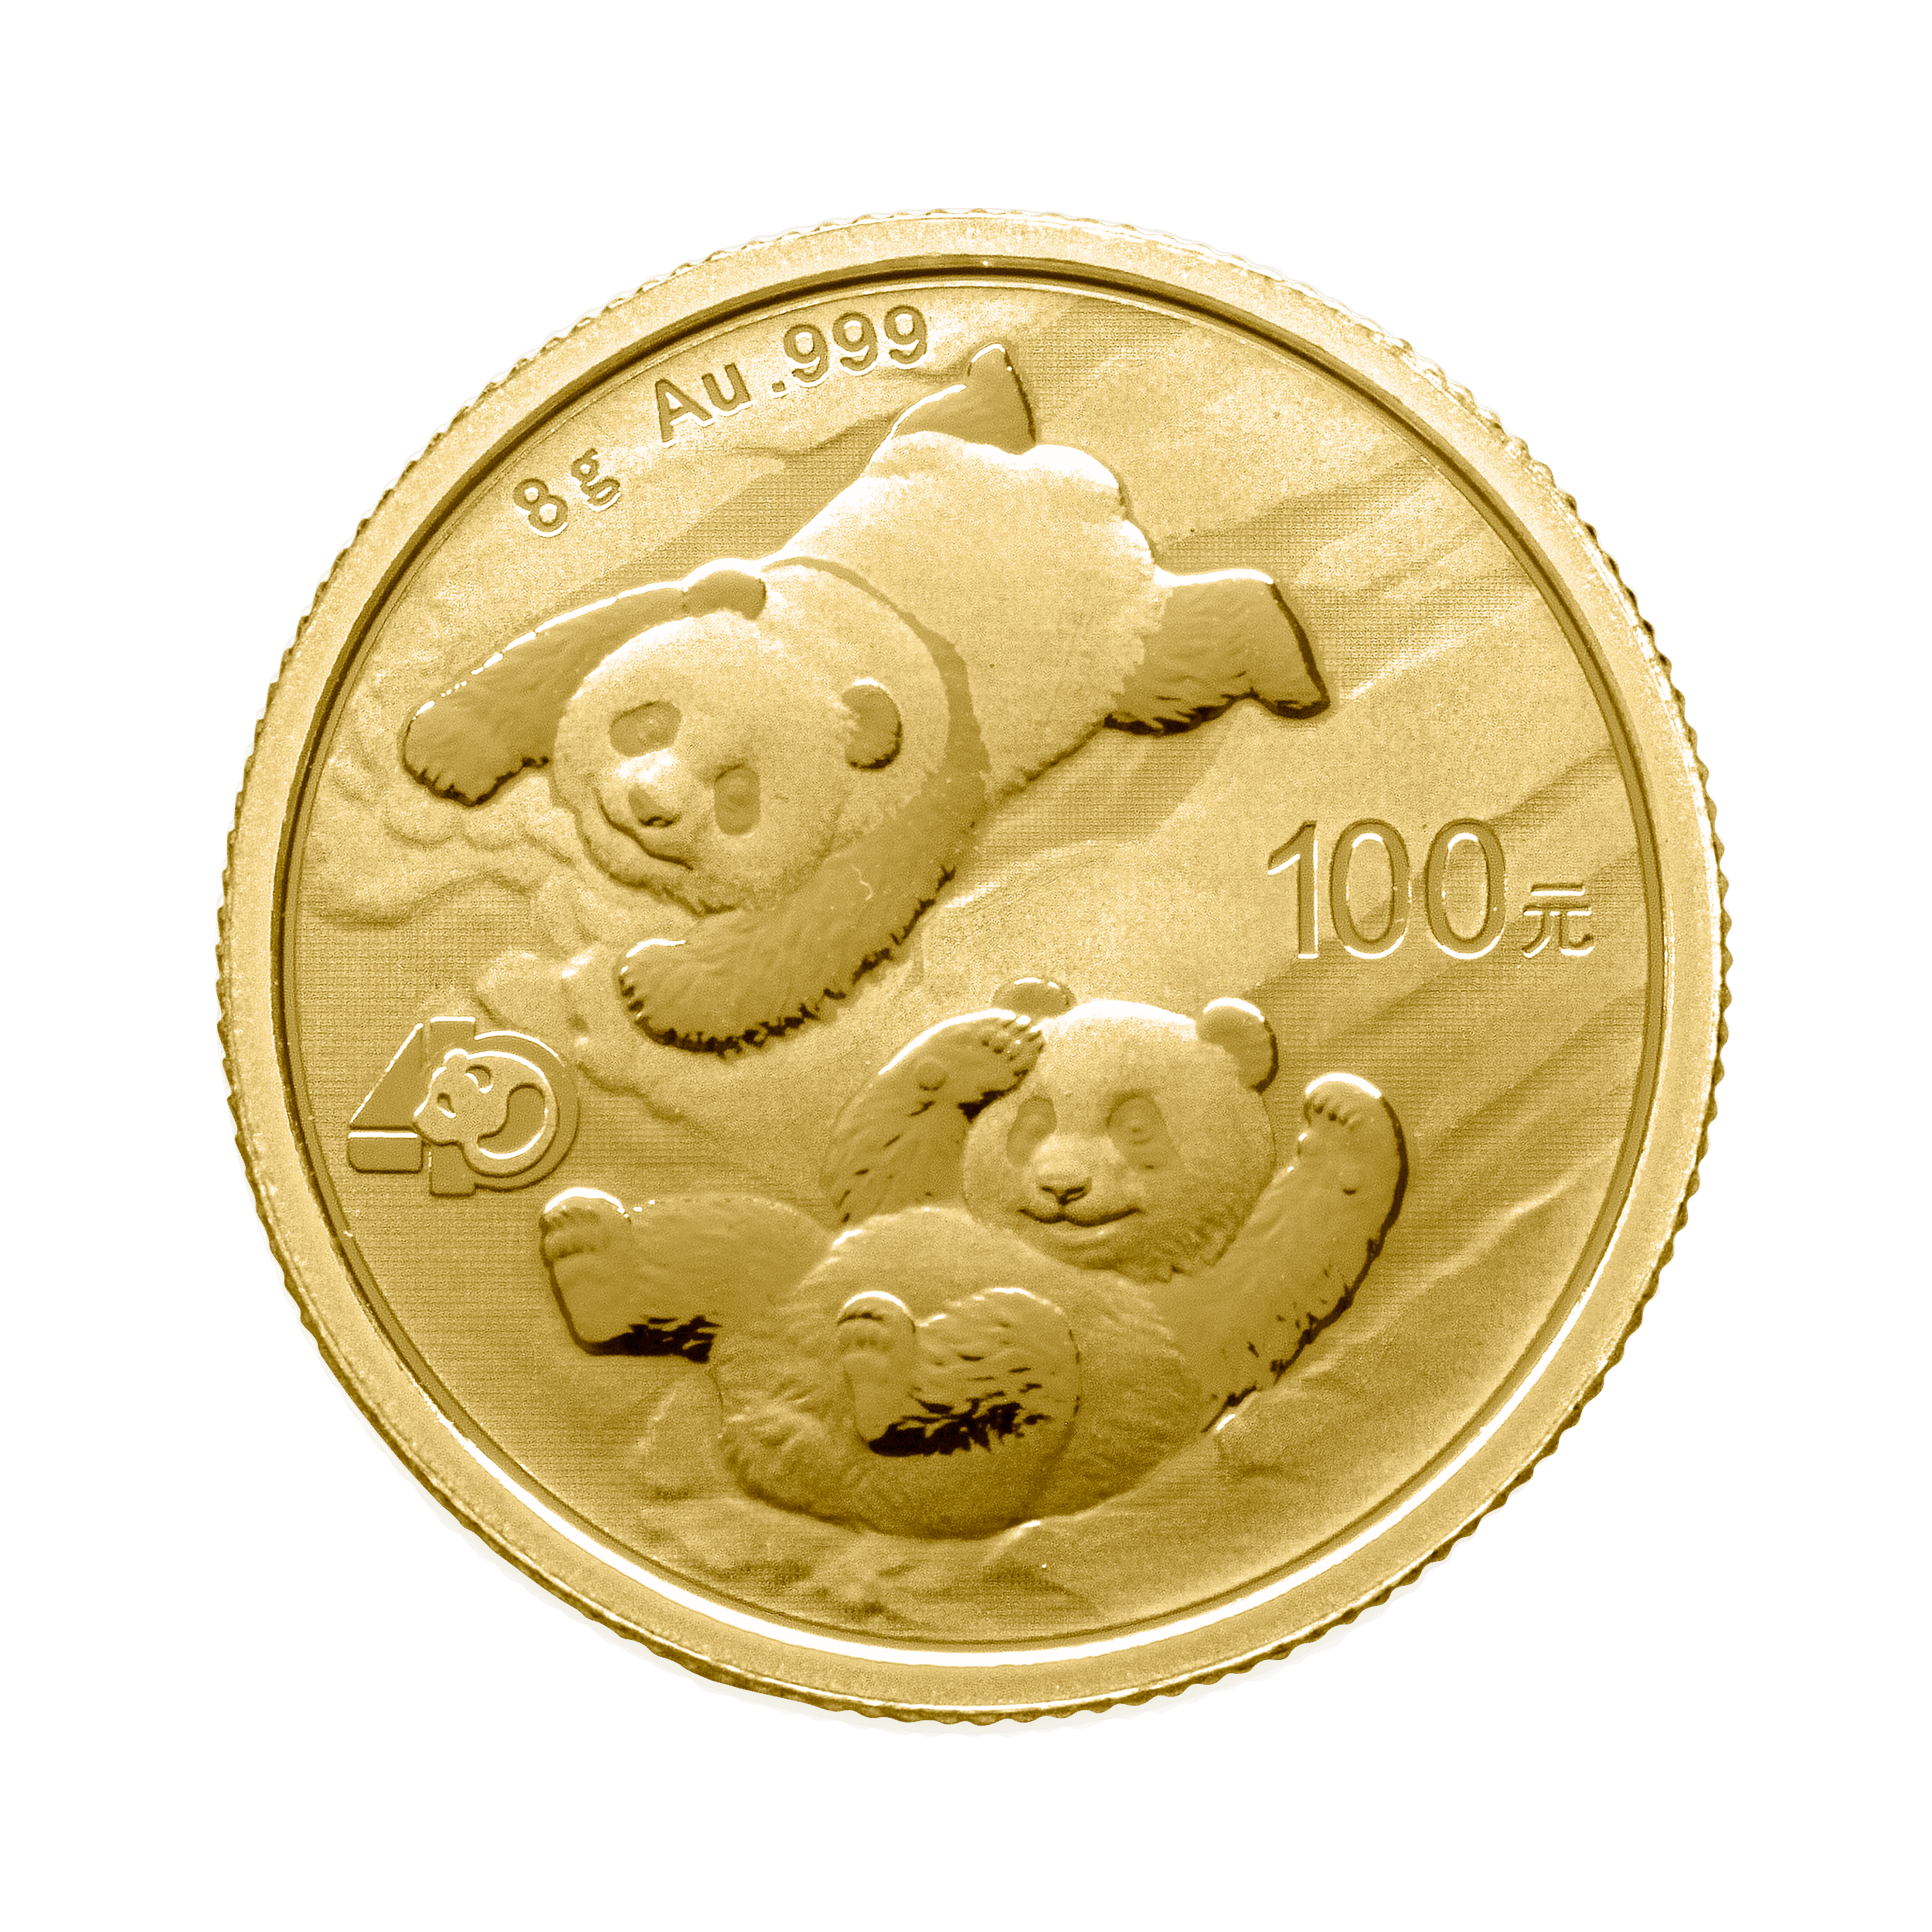 8 gram gouden Panda munt